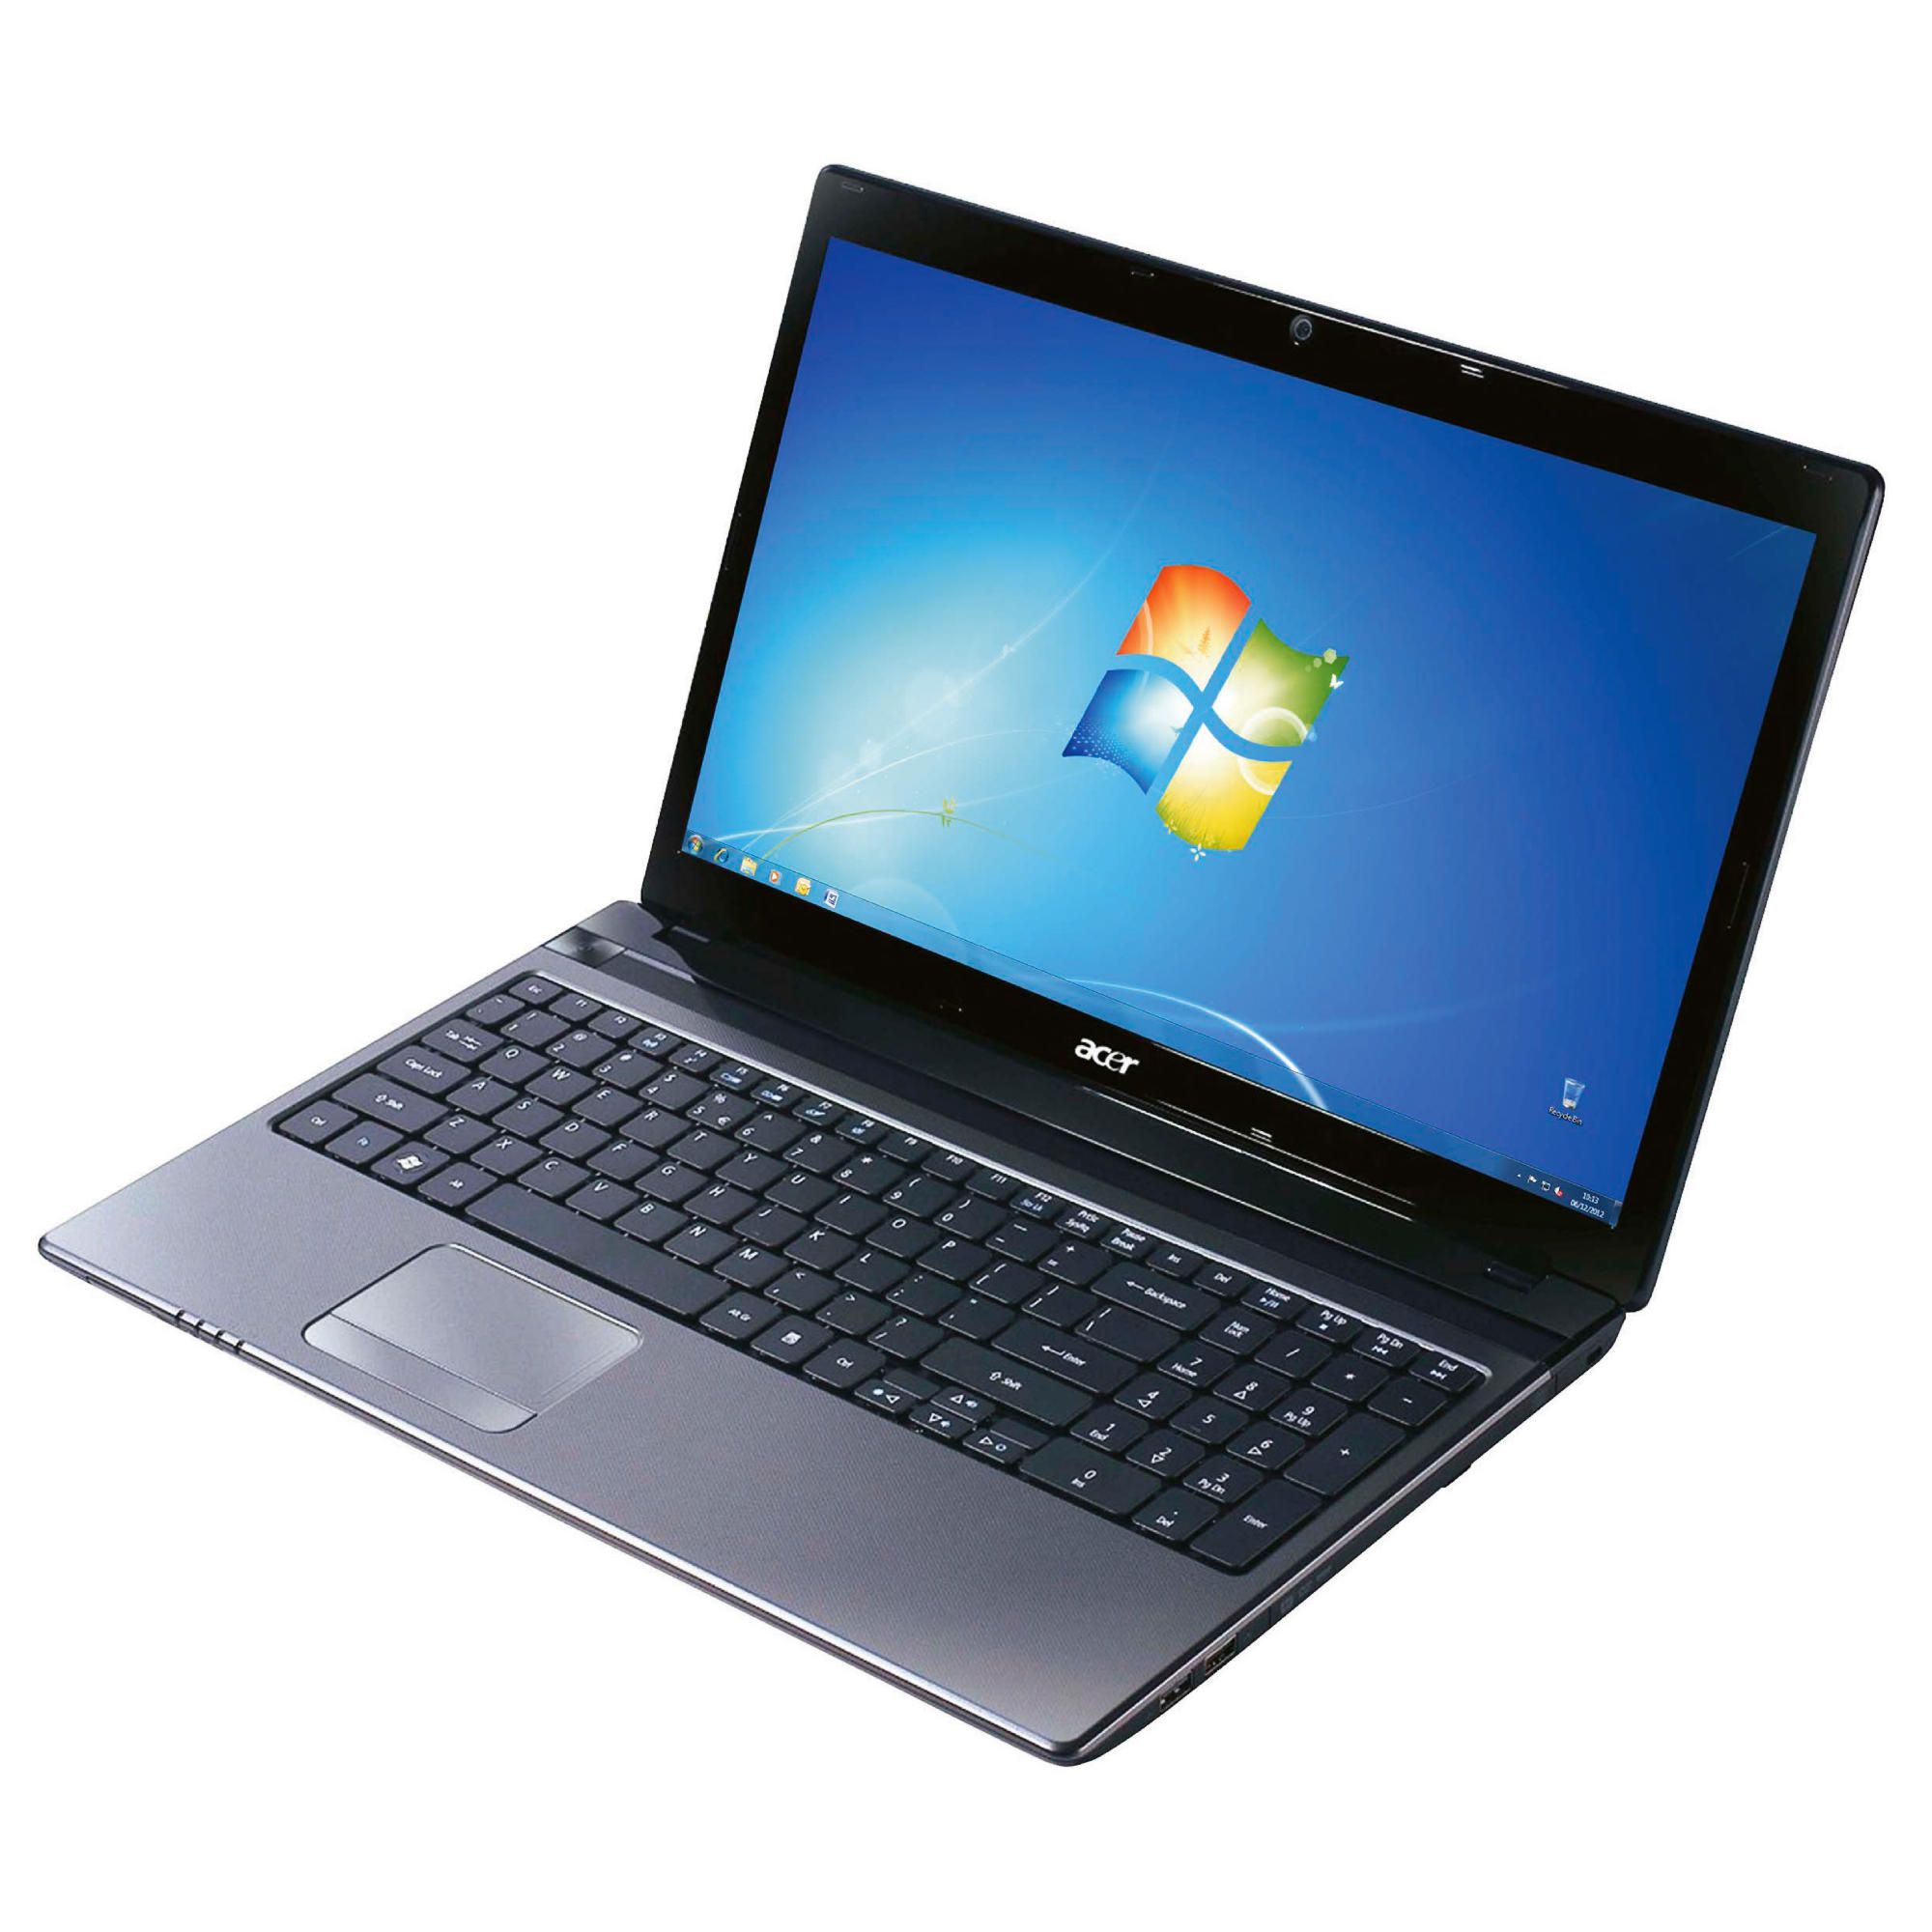 Acer Aspire 5755G Laptop (Core i7-2670Q, 8GB, 1TB, 15.6” Display) Black